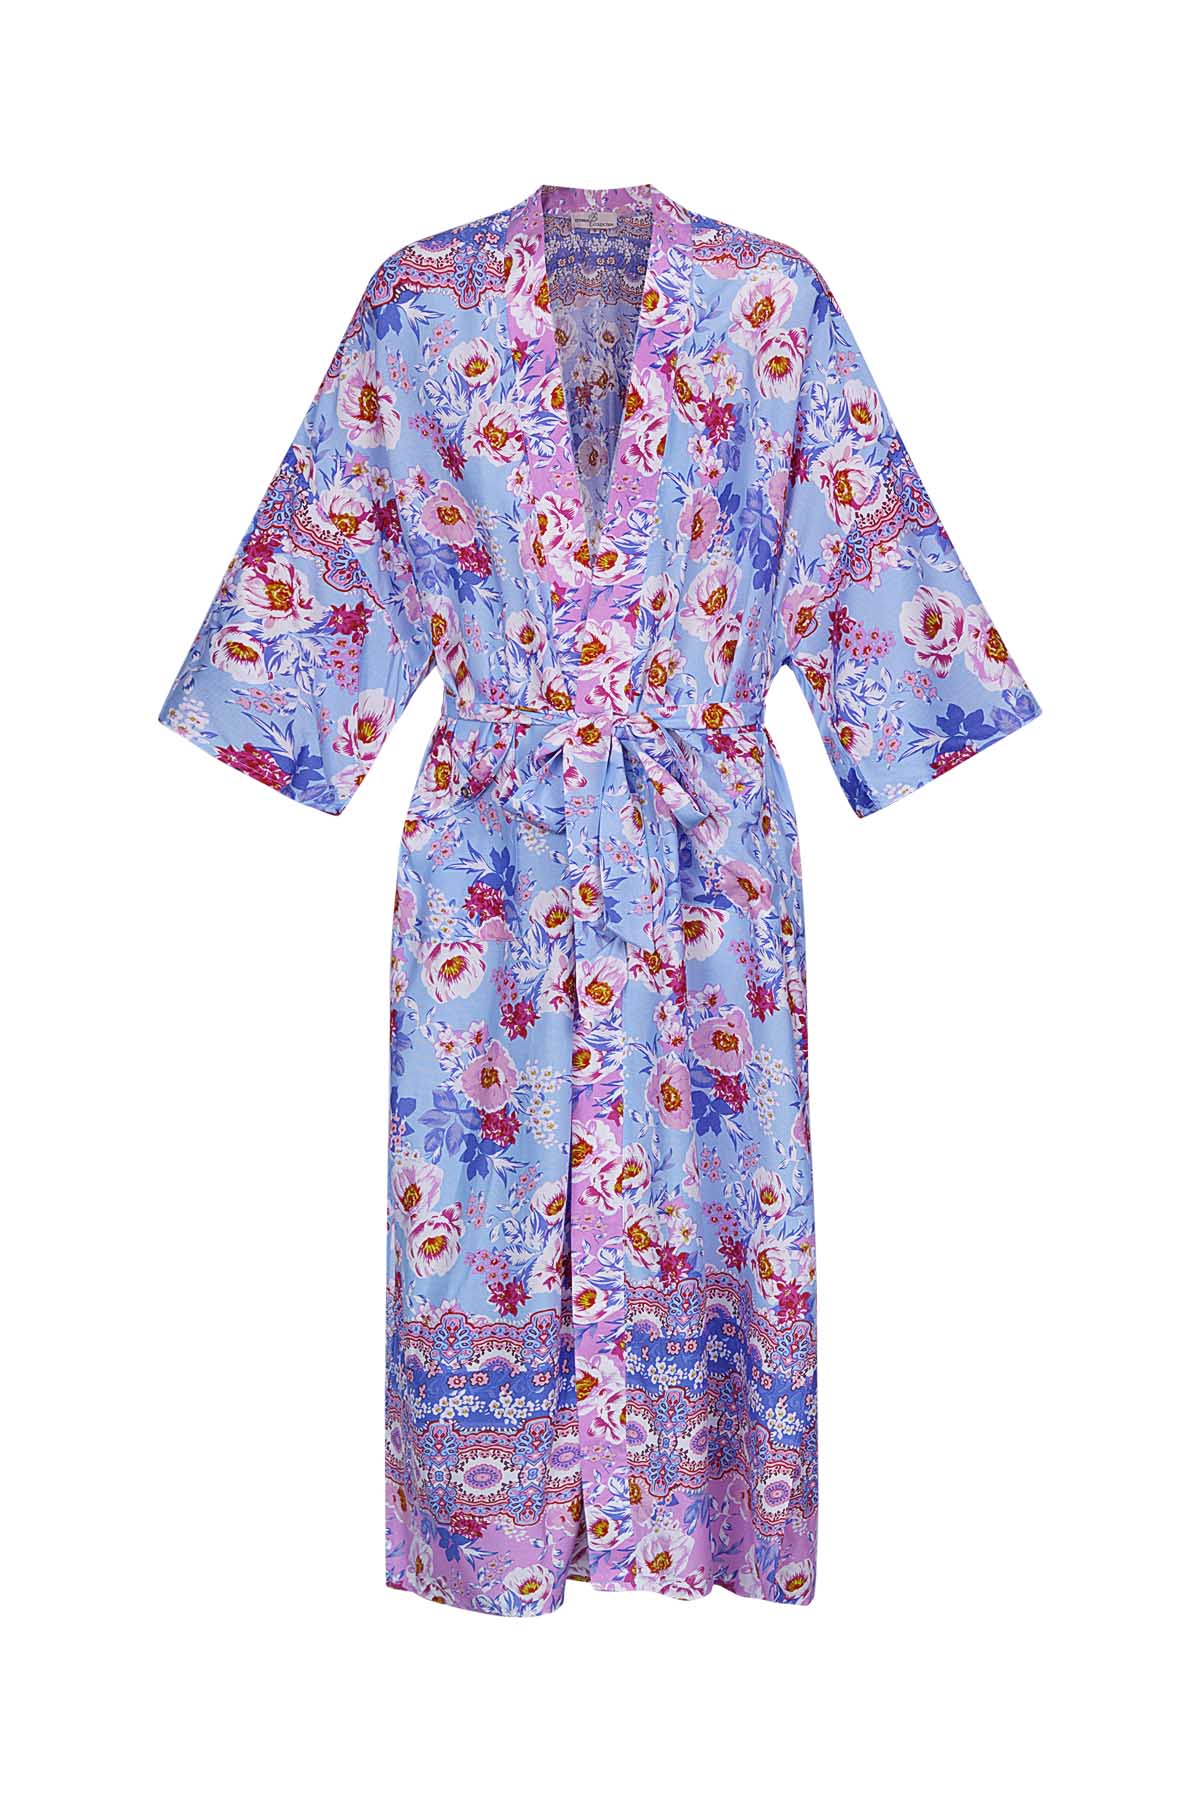 Çiçek desenli kimono - mavi h5 